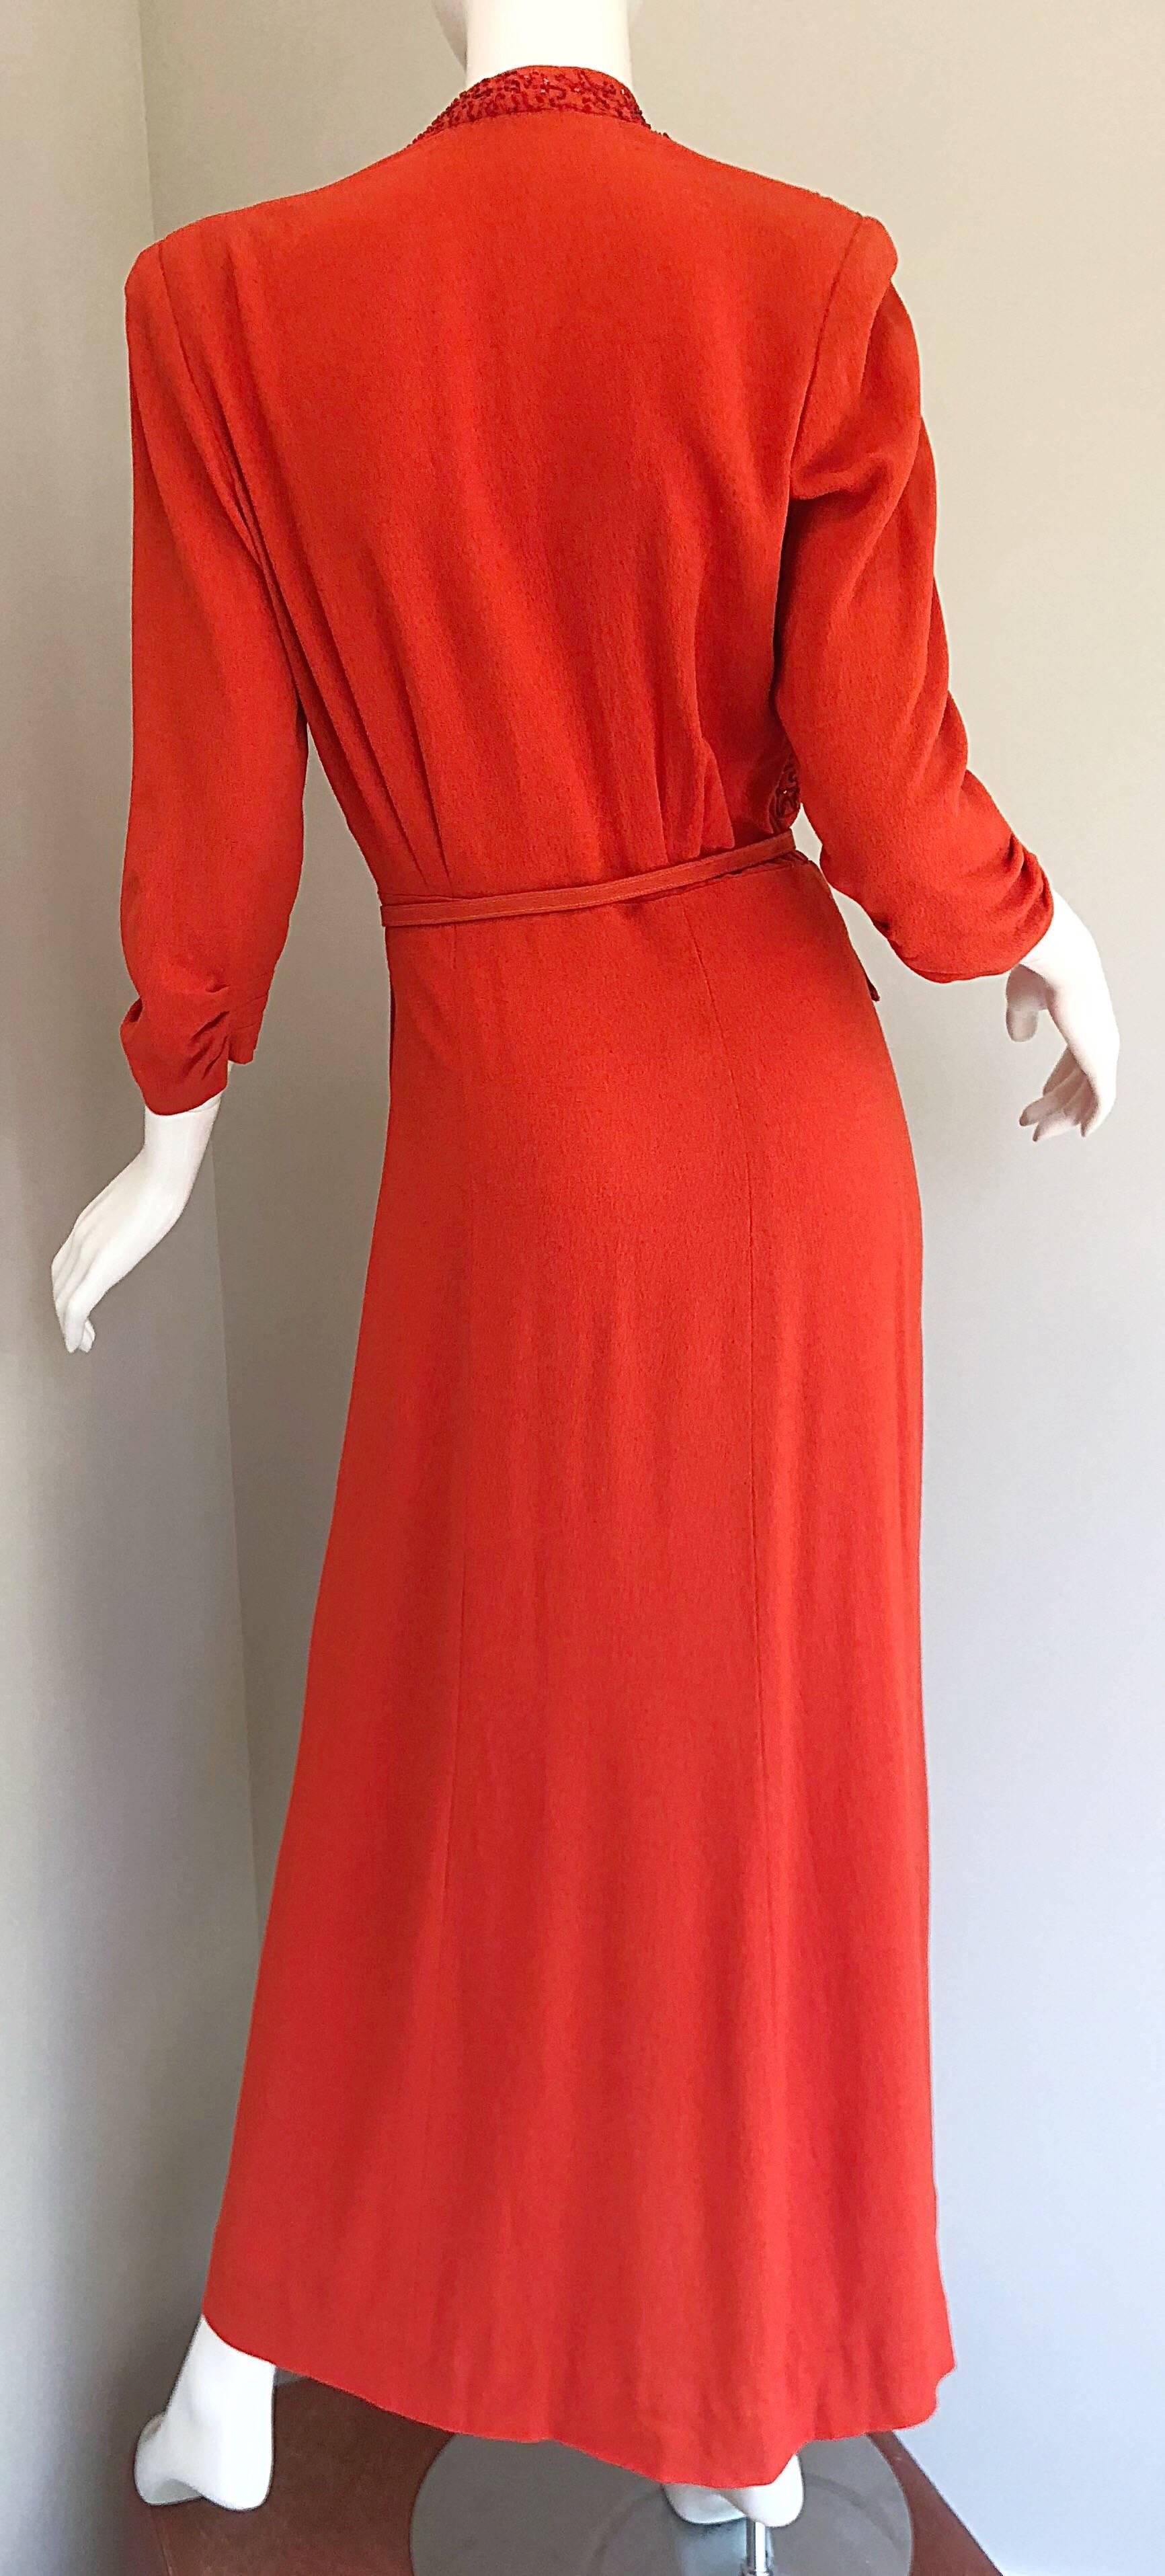 1940s Kornhauser Original Burnt Orange Beaded Vintage 40s Couture Crepe Gown For Sale 7